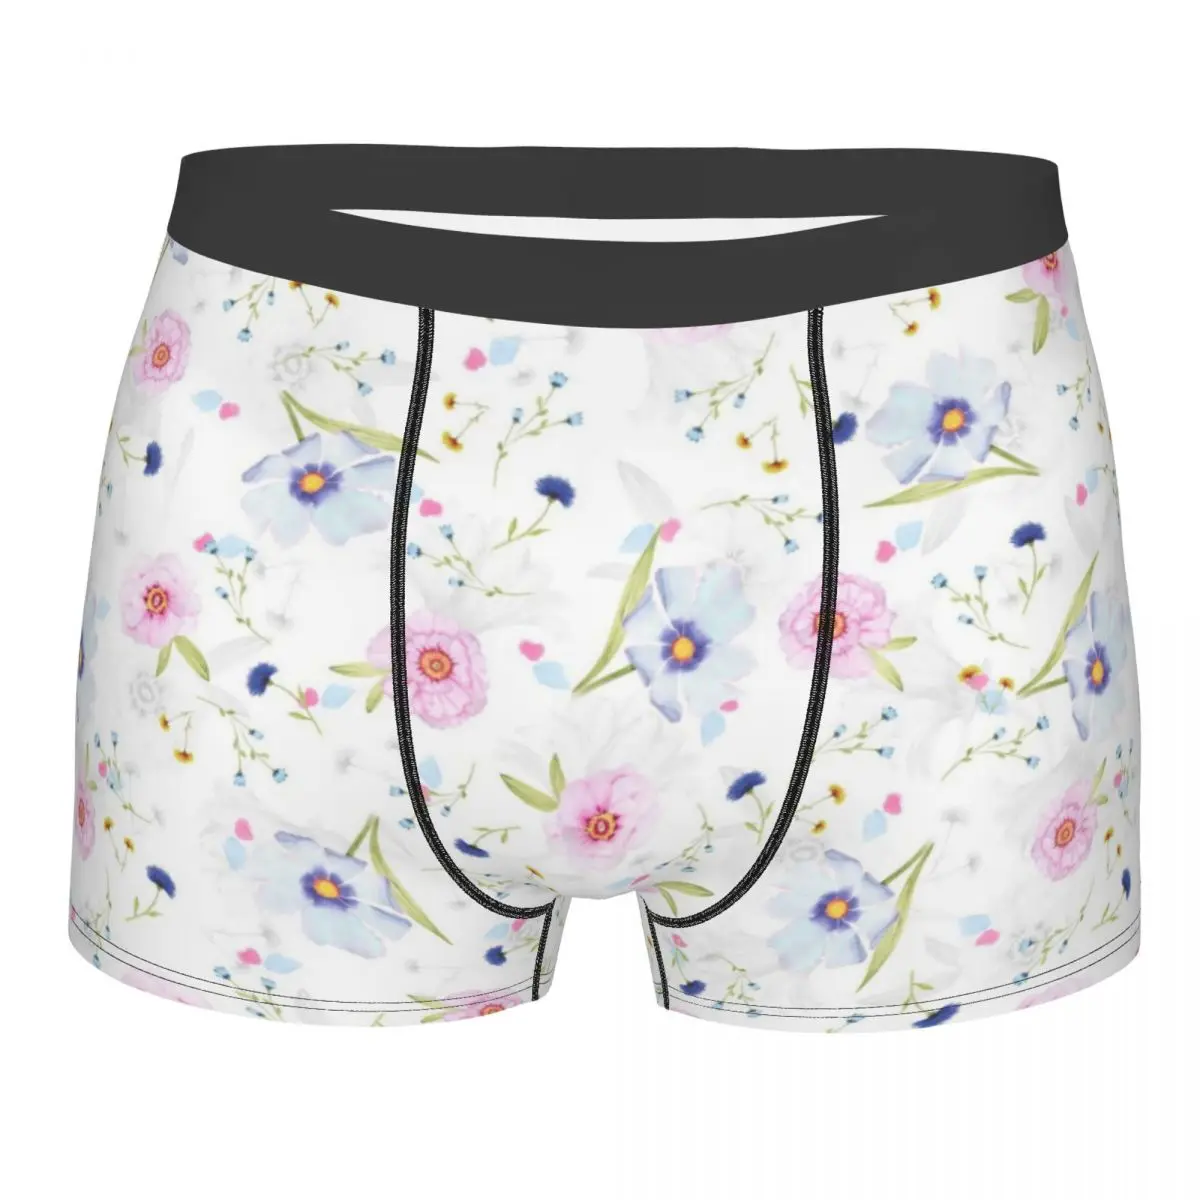 Boxer Homens Underwear Masculino Calcinha Primavera Floral Shorts Boxer Shorts Confortáveis Homme